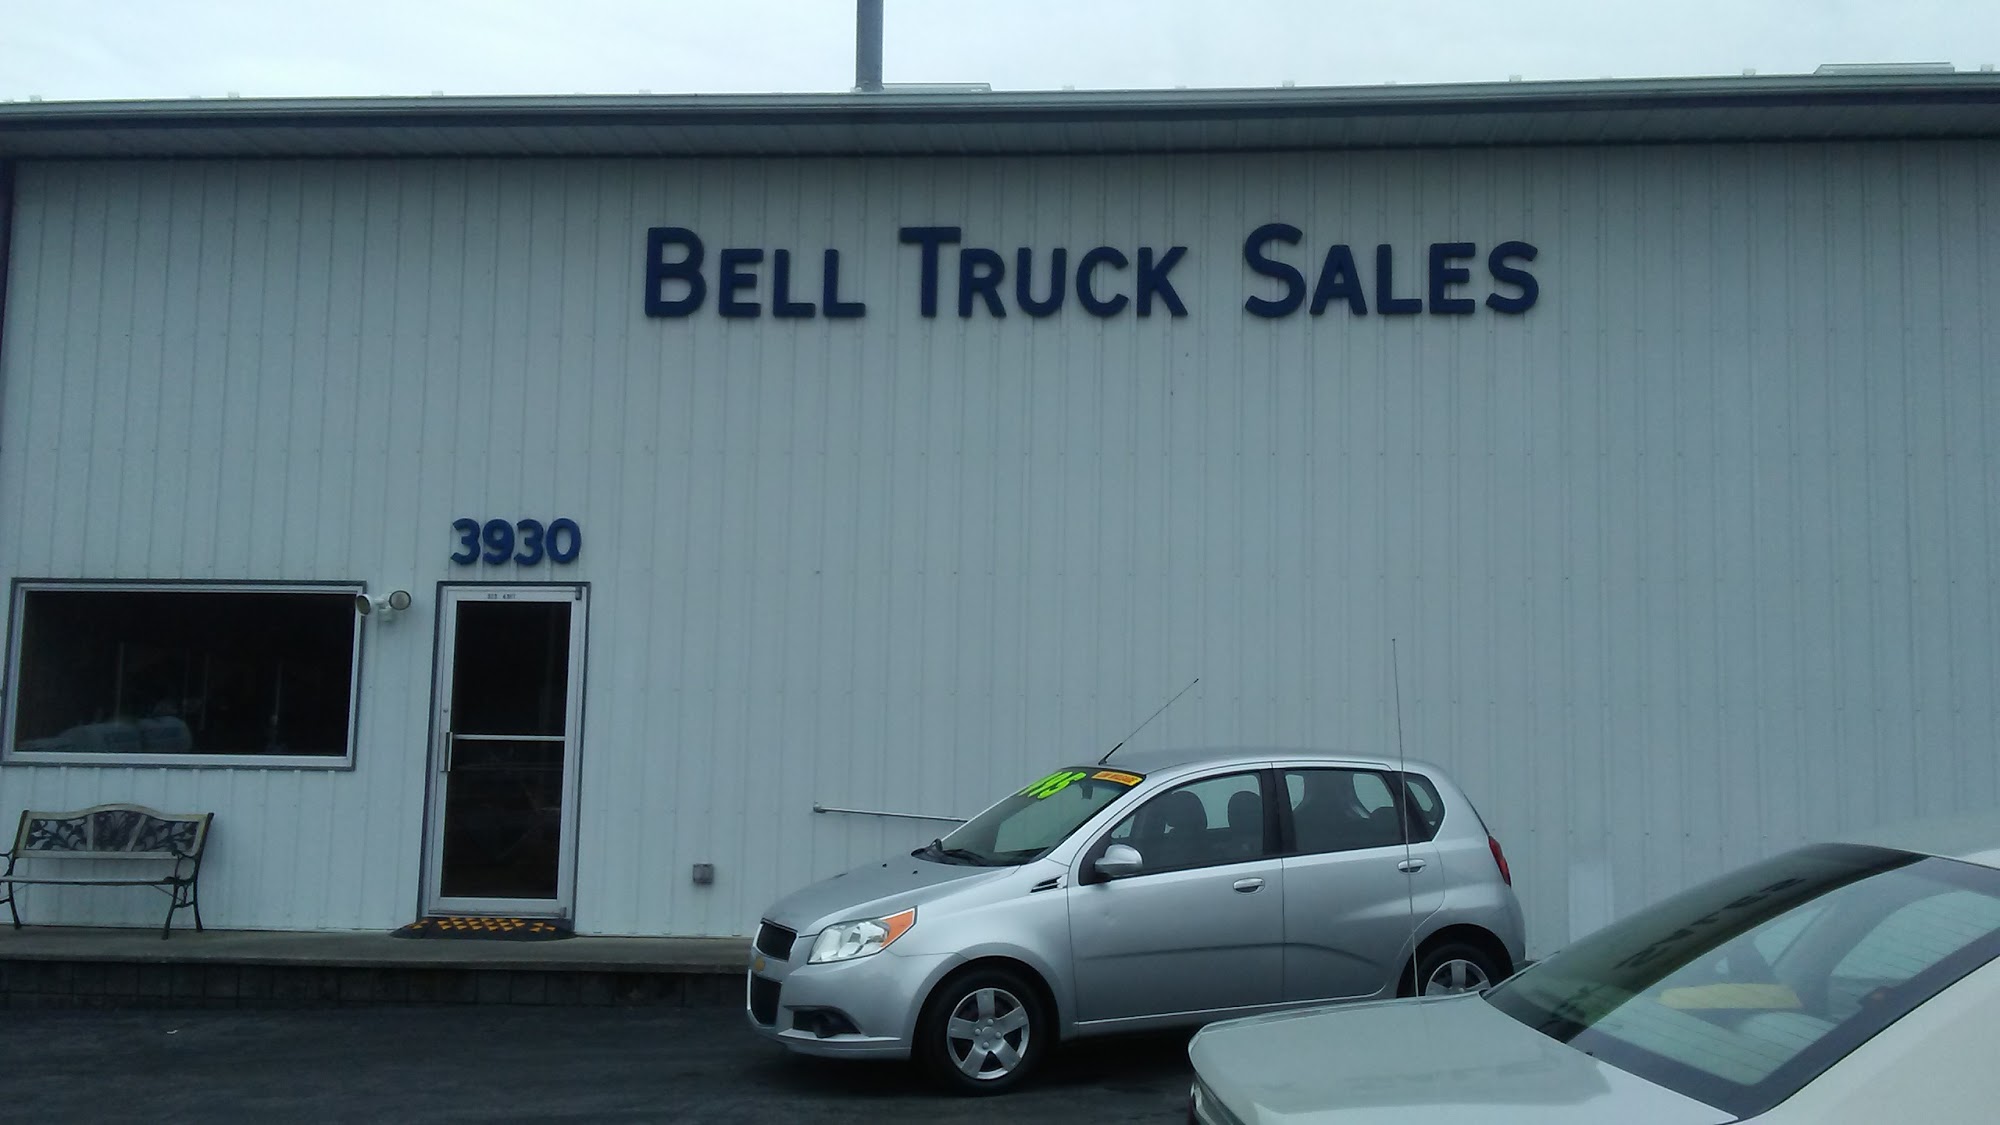 Bell Truck Sales